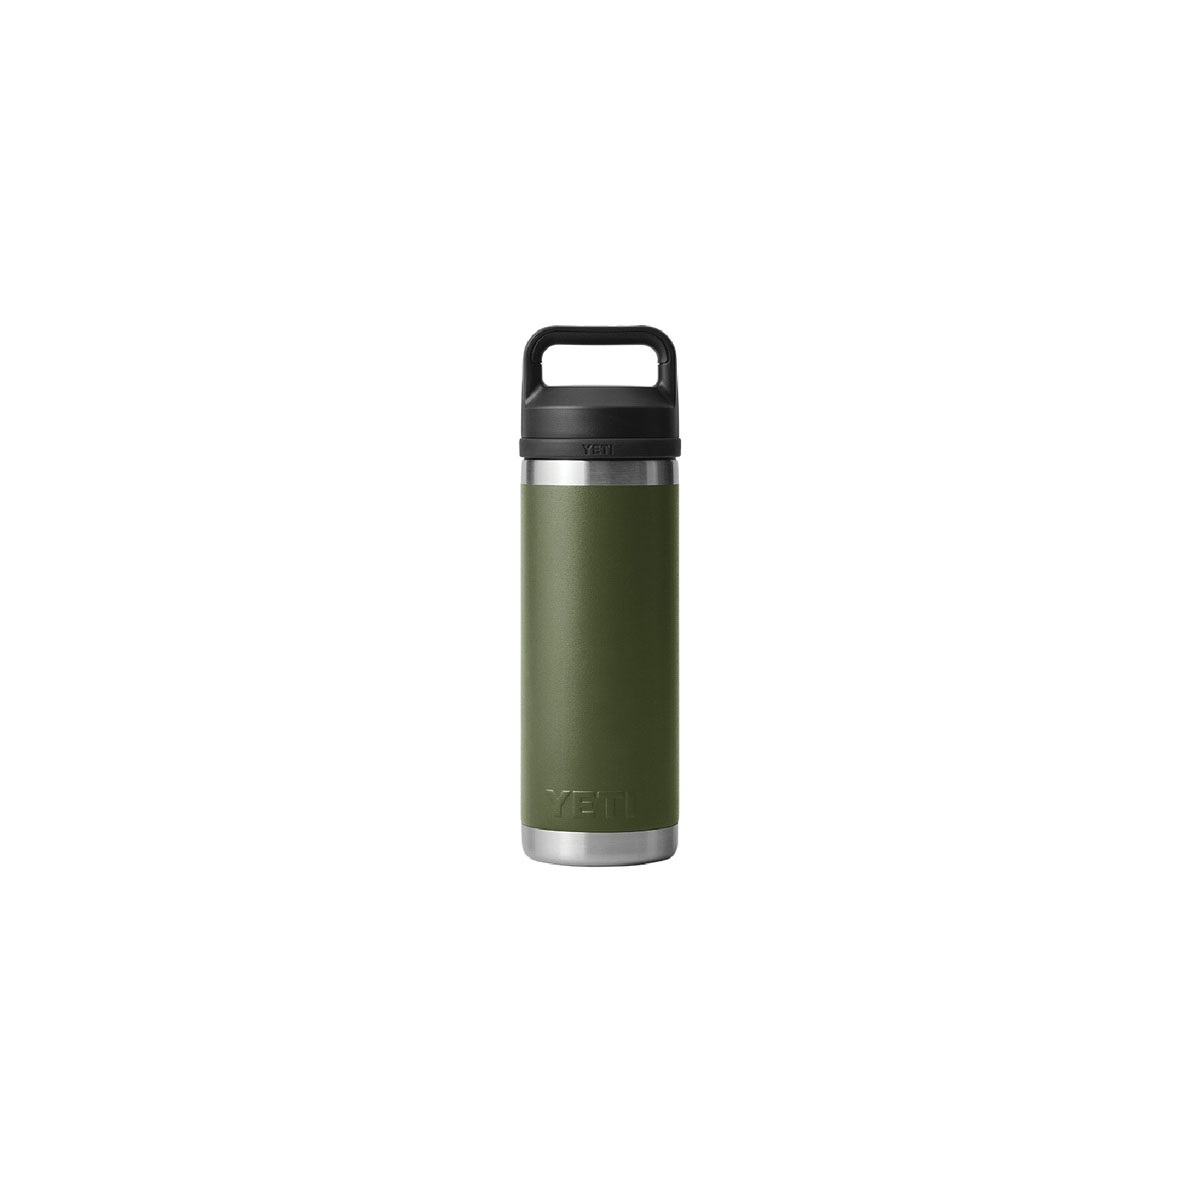 Yeti Rambler Bottle Holder Small Highlands Olive